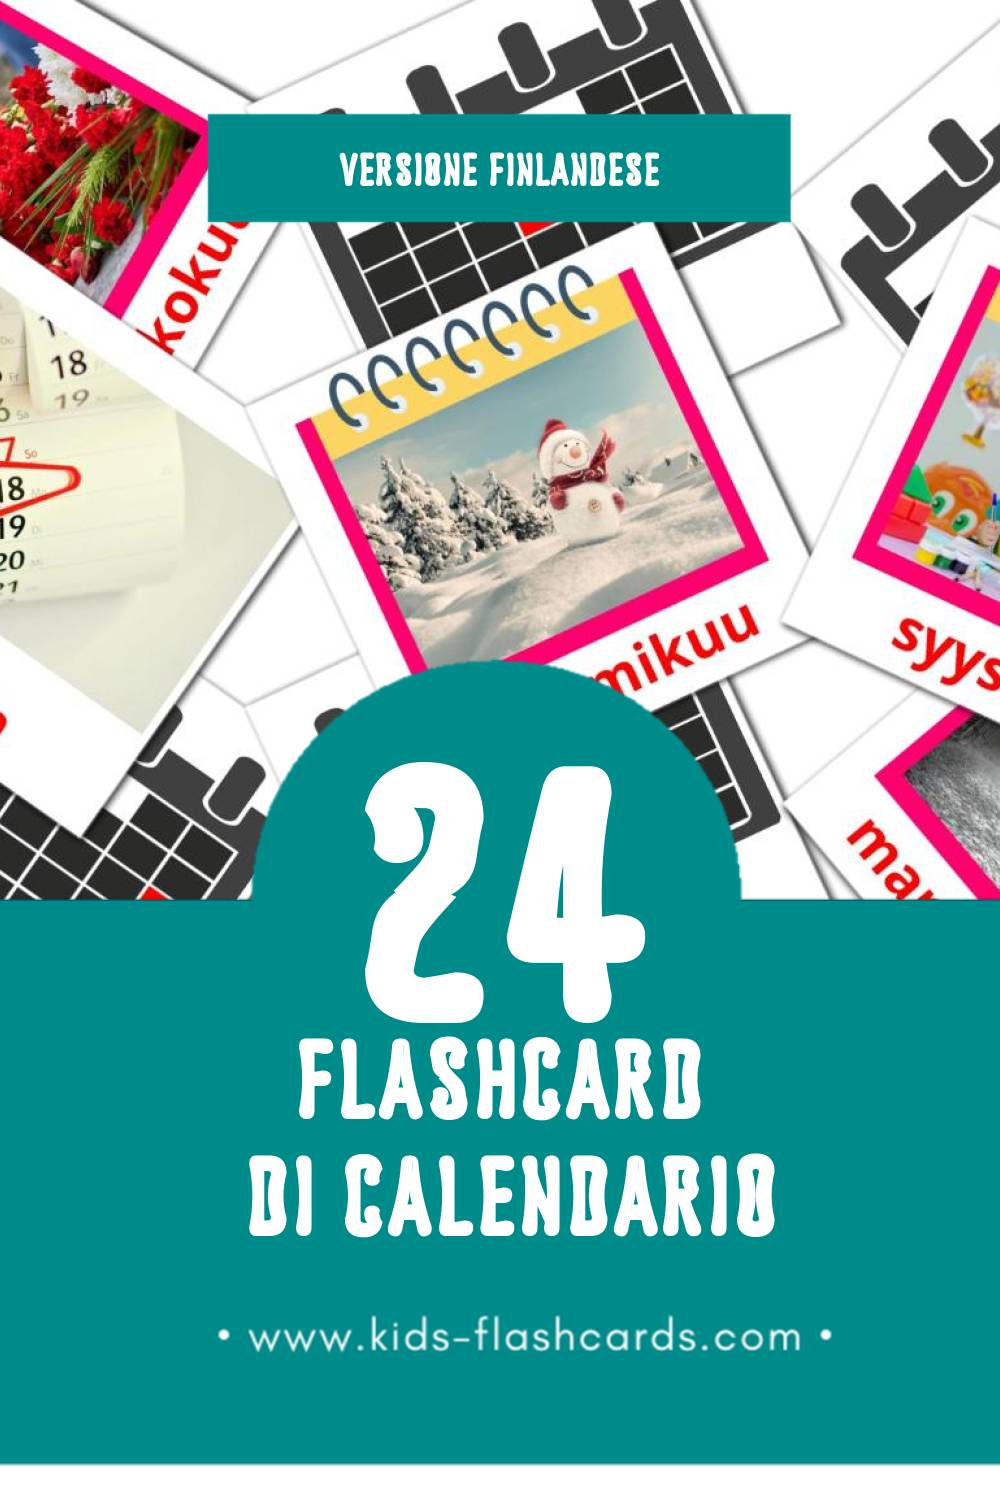 Schede visive sugli Kalenteri per bambini (24 schede in Finlandese)